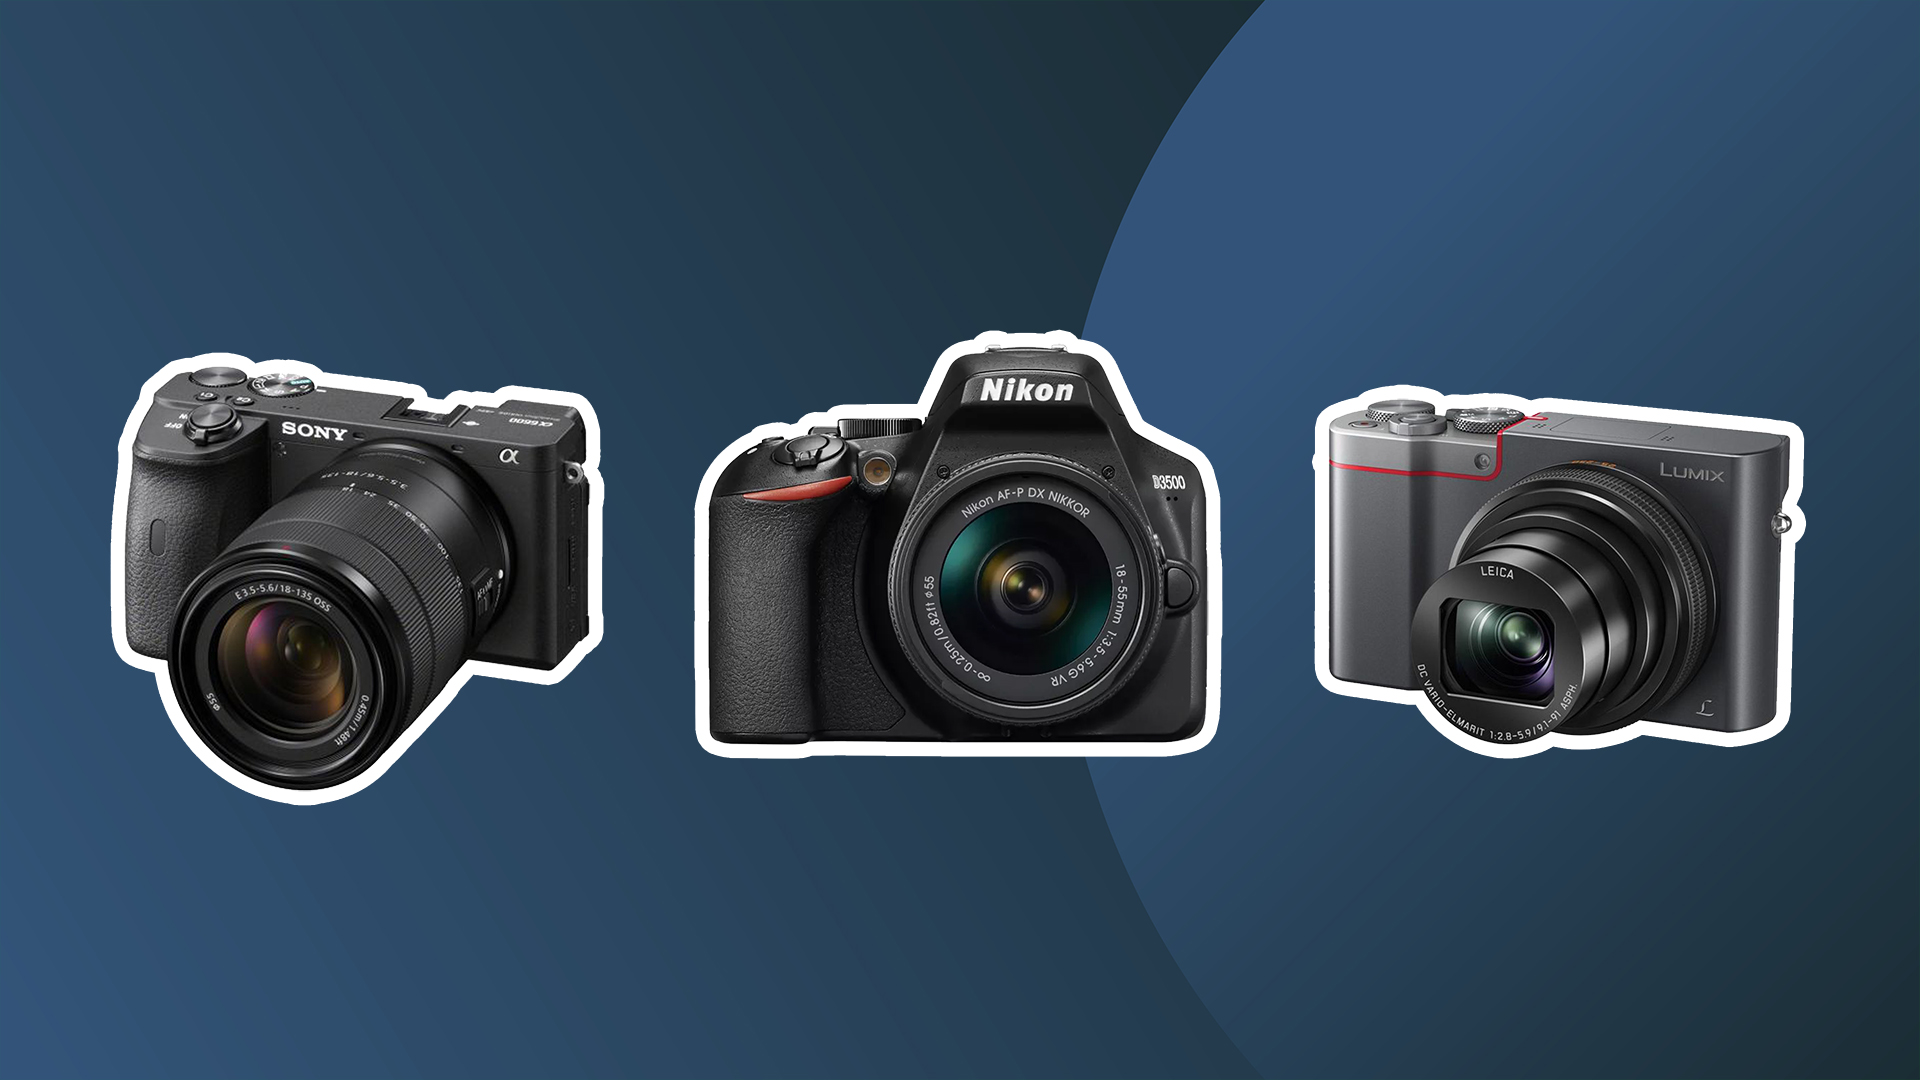  Digital Cameras: Electronics: Point & Shoot Digital Cameras,  DSLR Cameras, Mirrorless Cameras & More